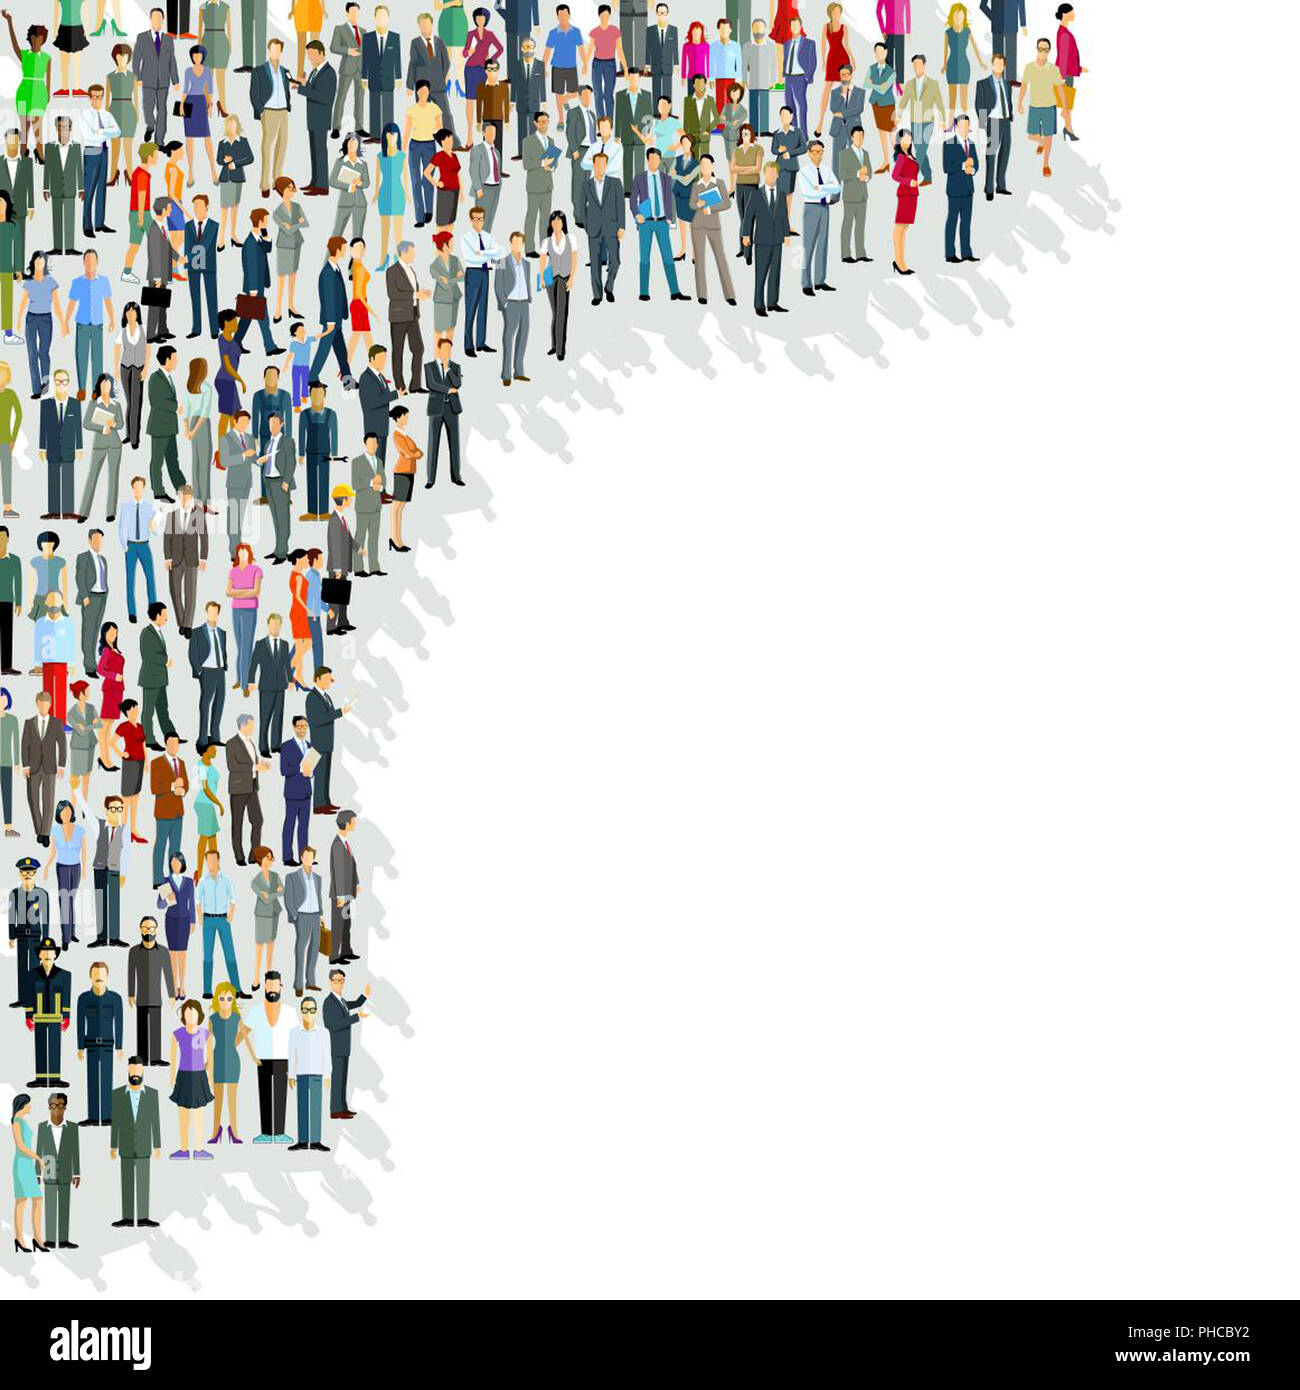 Large group of people, crowd community, Illustration Stock Photo